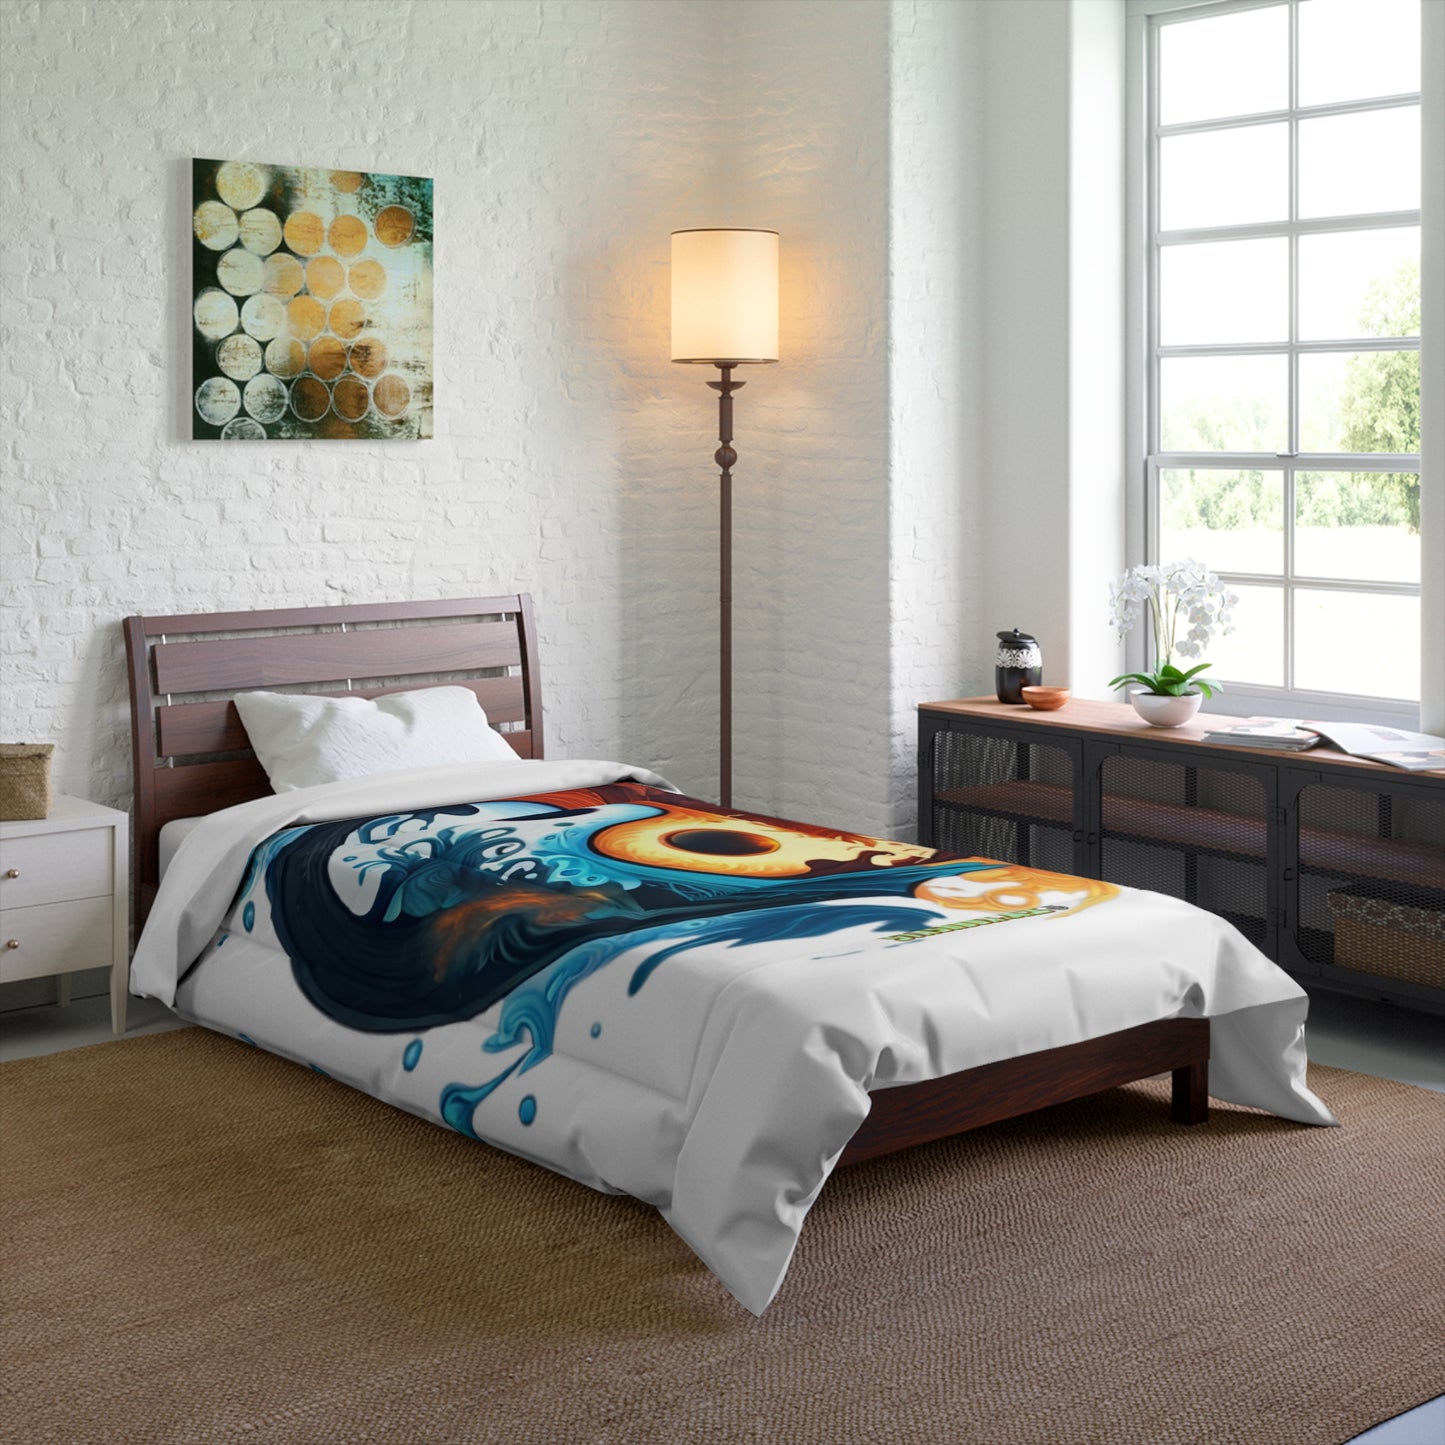 Bedding Comforter Artistic Yin Yang by Joel Lovett Design 001